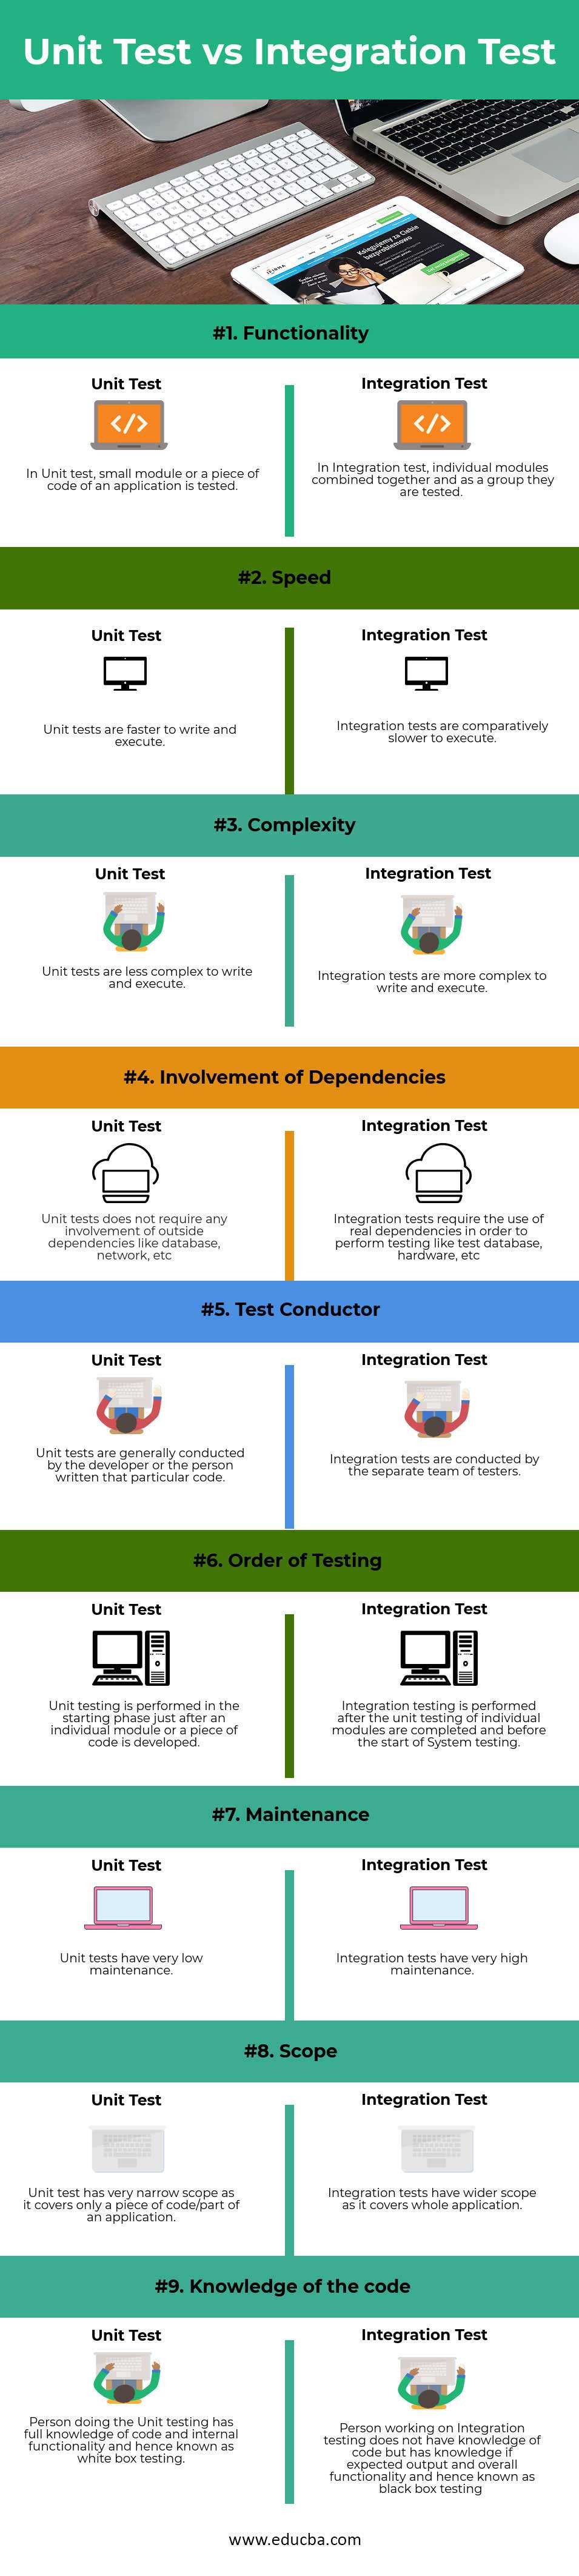 Unit-Test-vs-Integration-Test-info